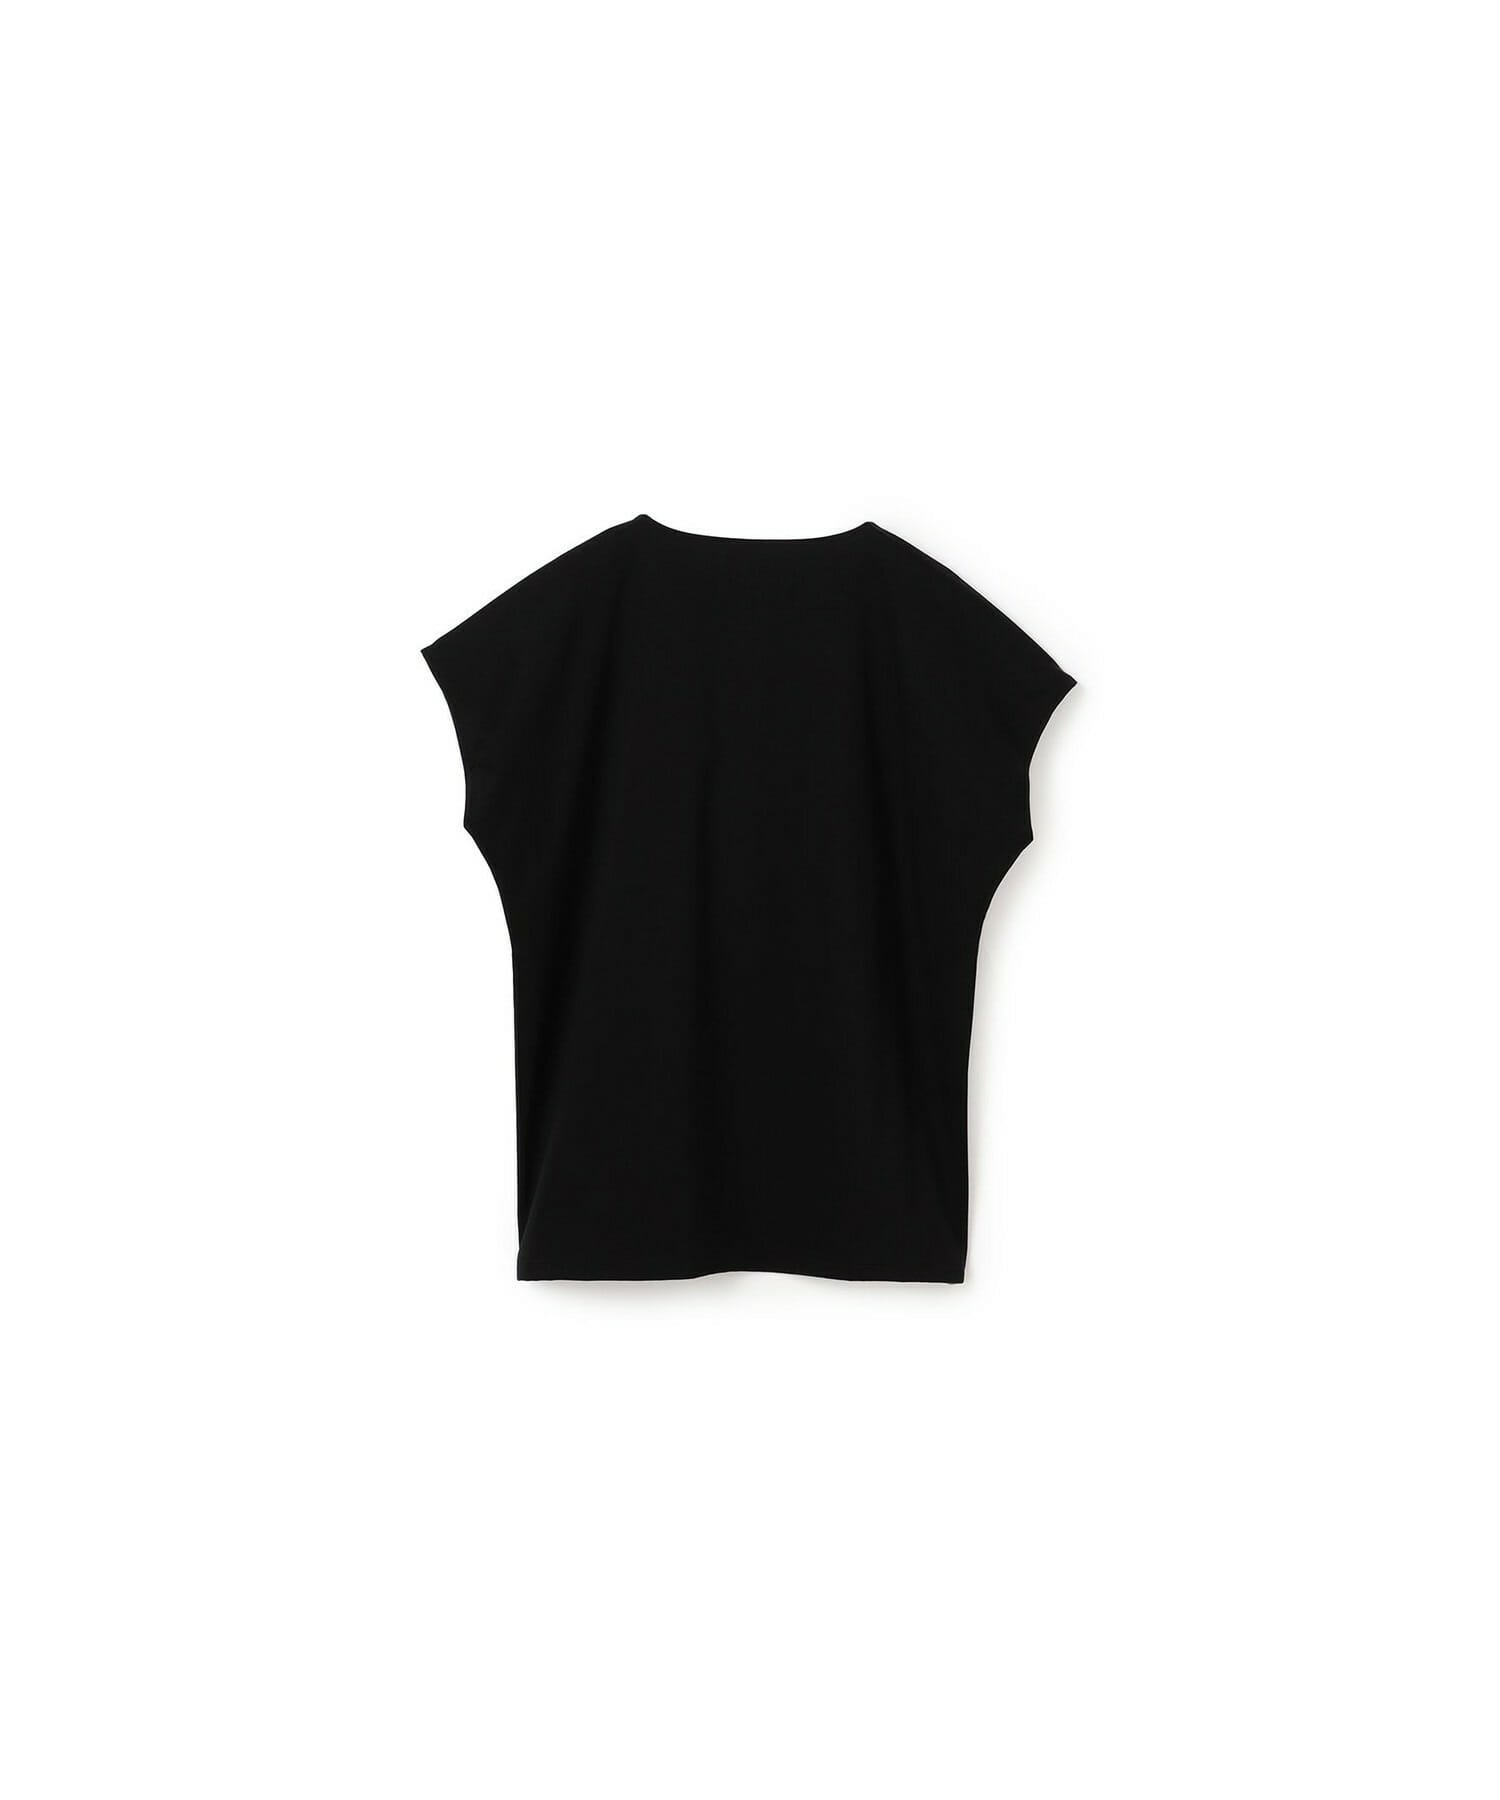 【yoshie inaba】コットンライトスムースリップスティック柄Tシャツ 詳細画像 ブラウン 6